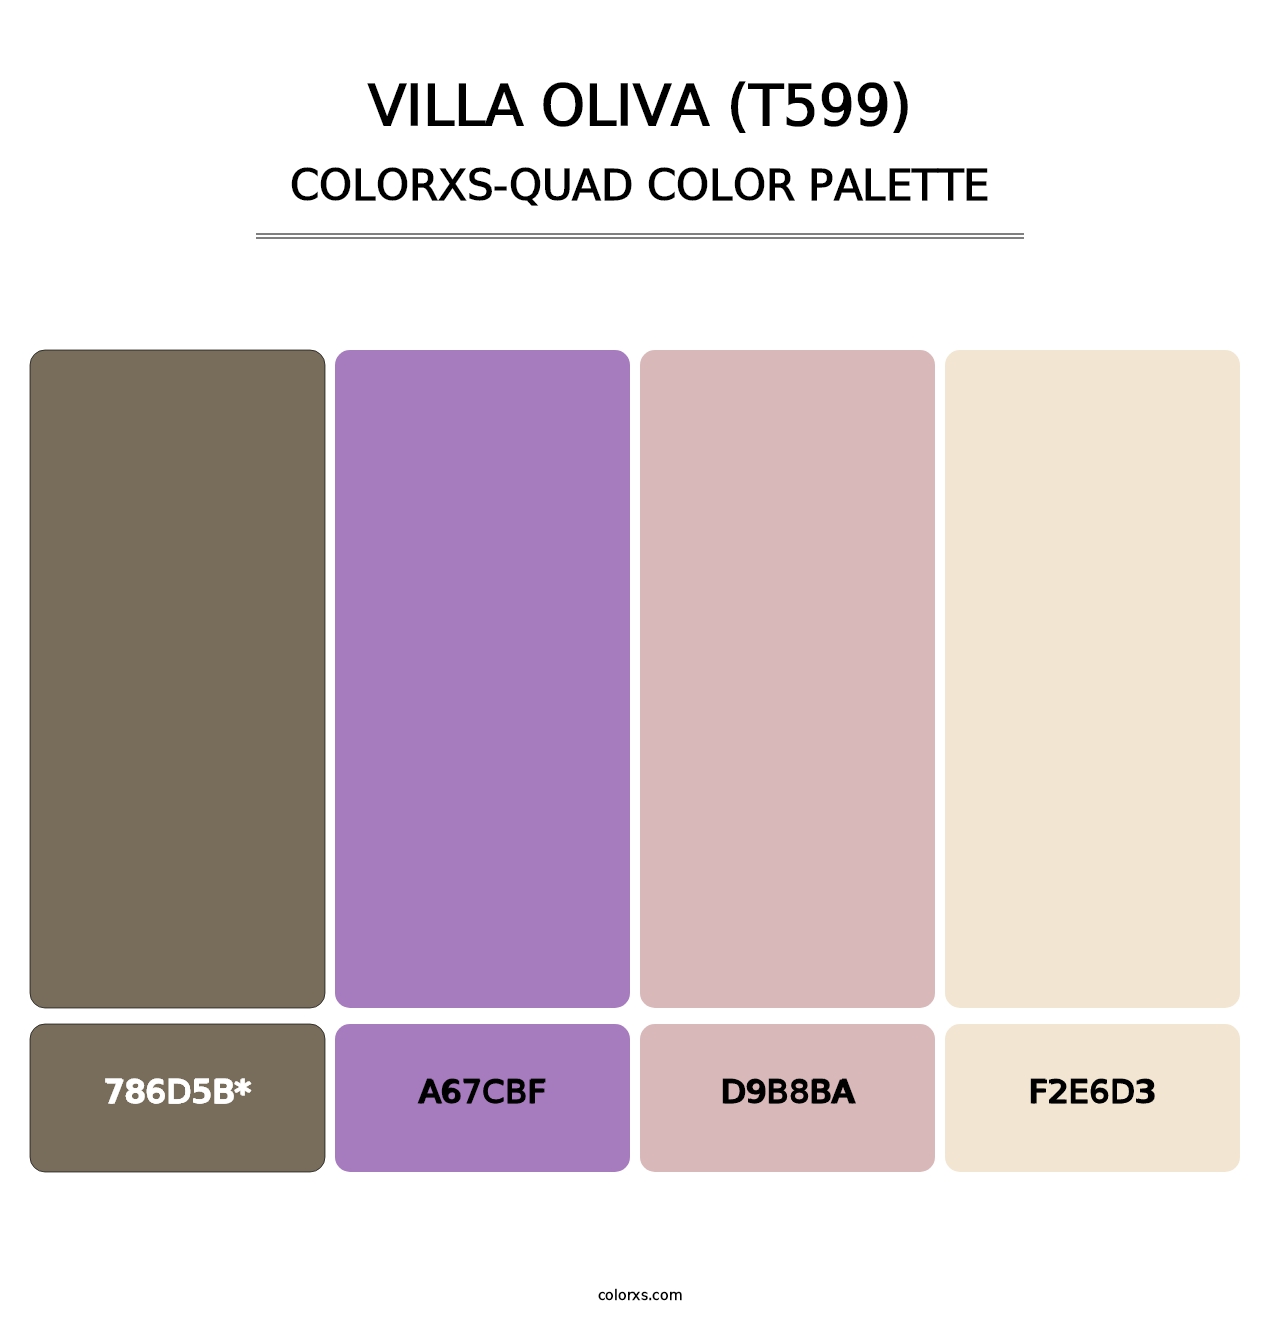 Villa Oliva (T599) - Colorxs Quad Palette